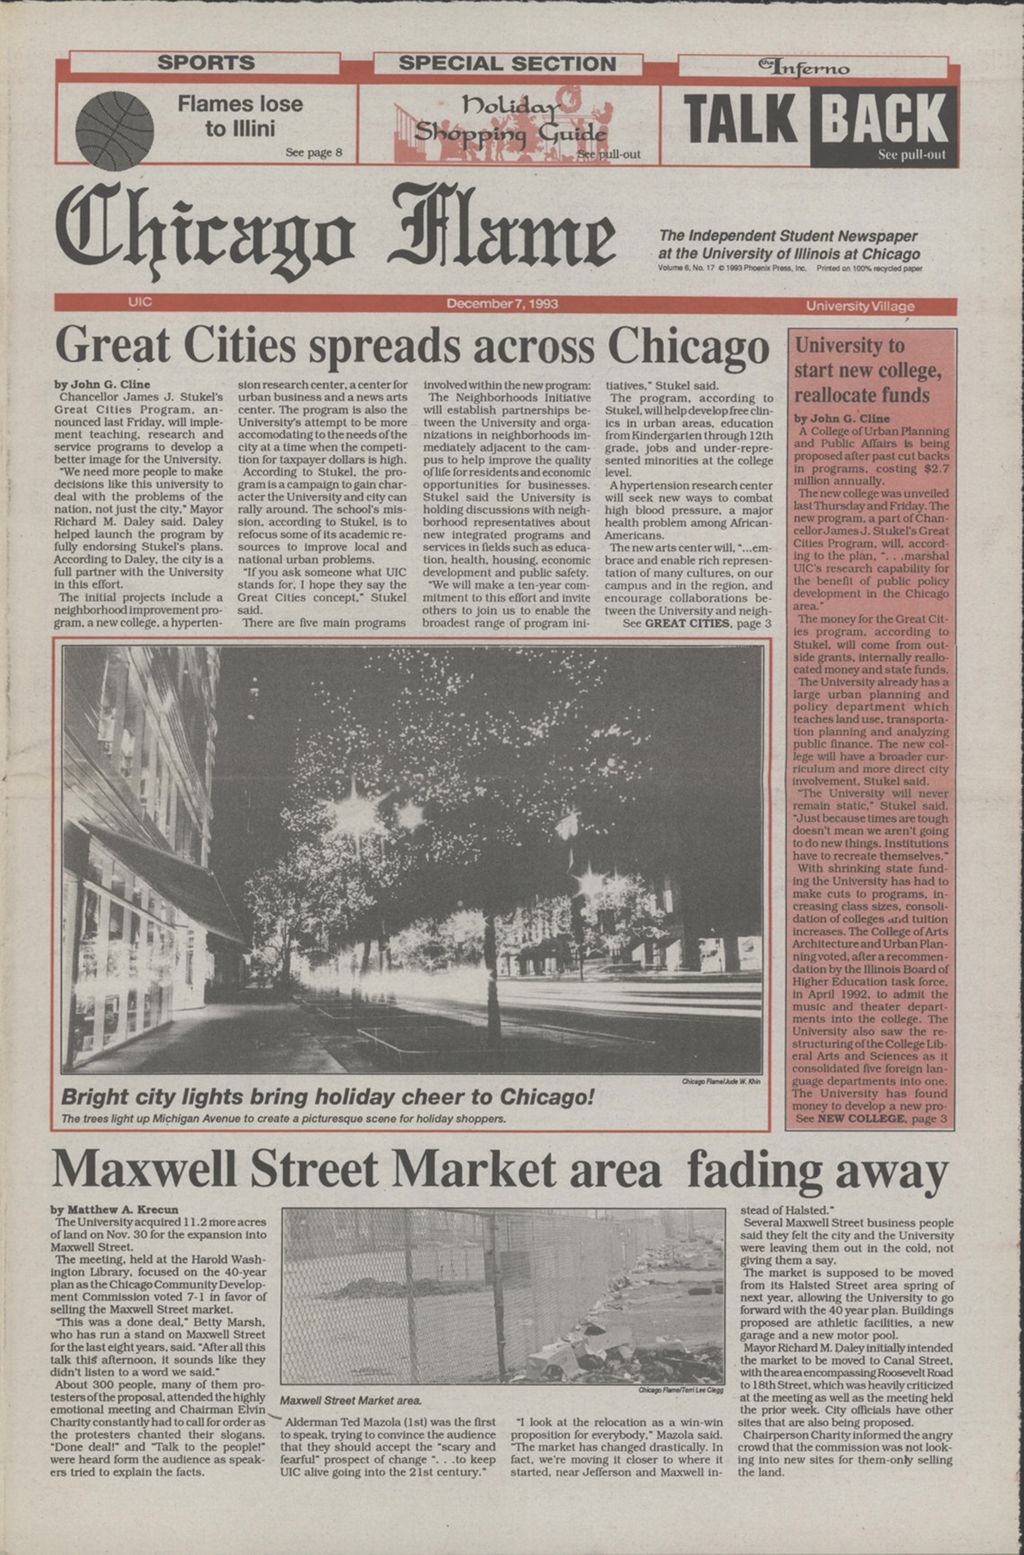 Chicago Flame (December 7, 1993)